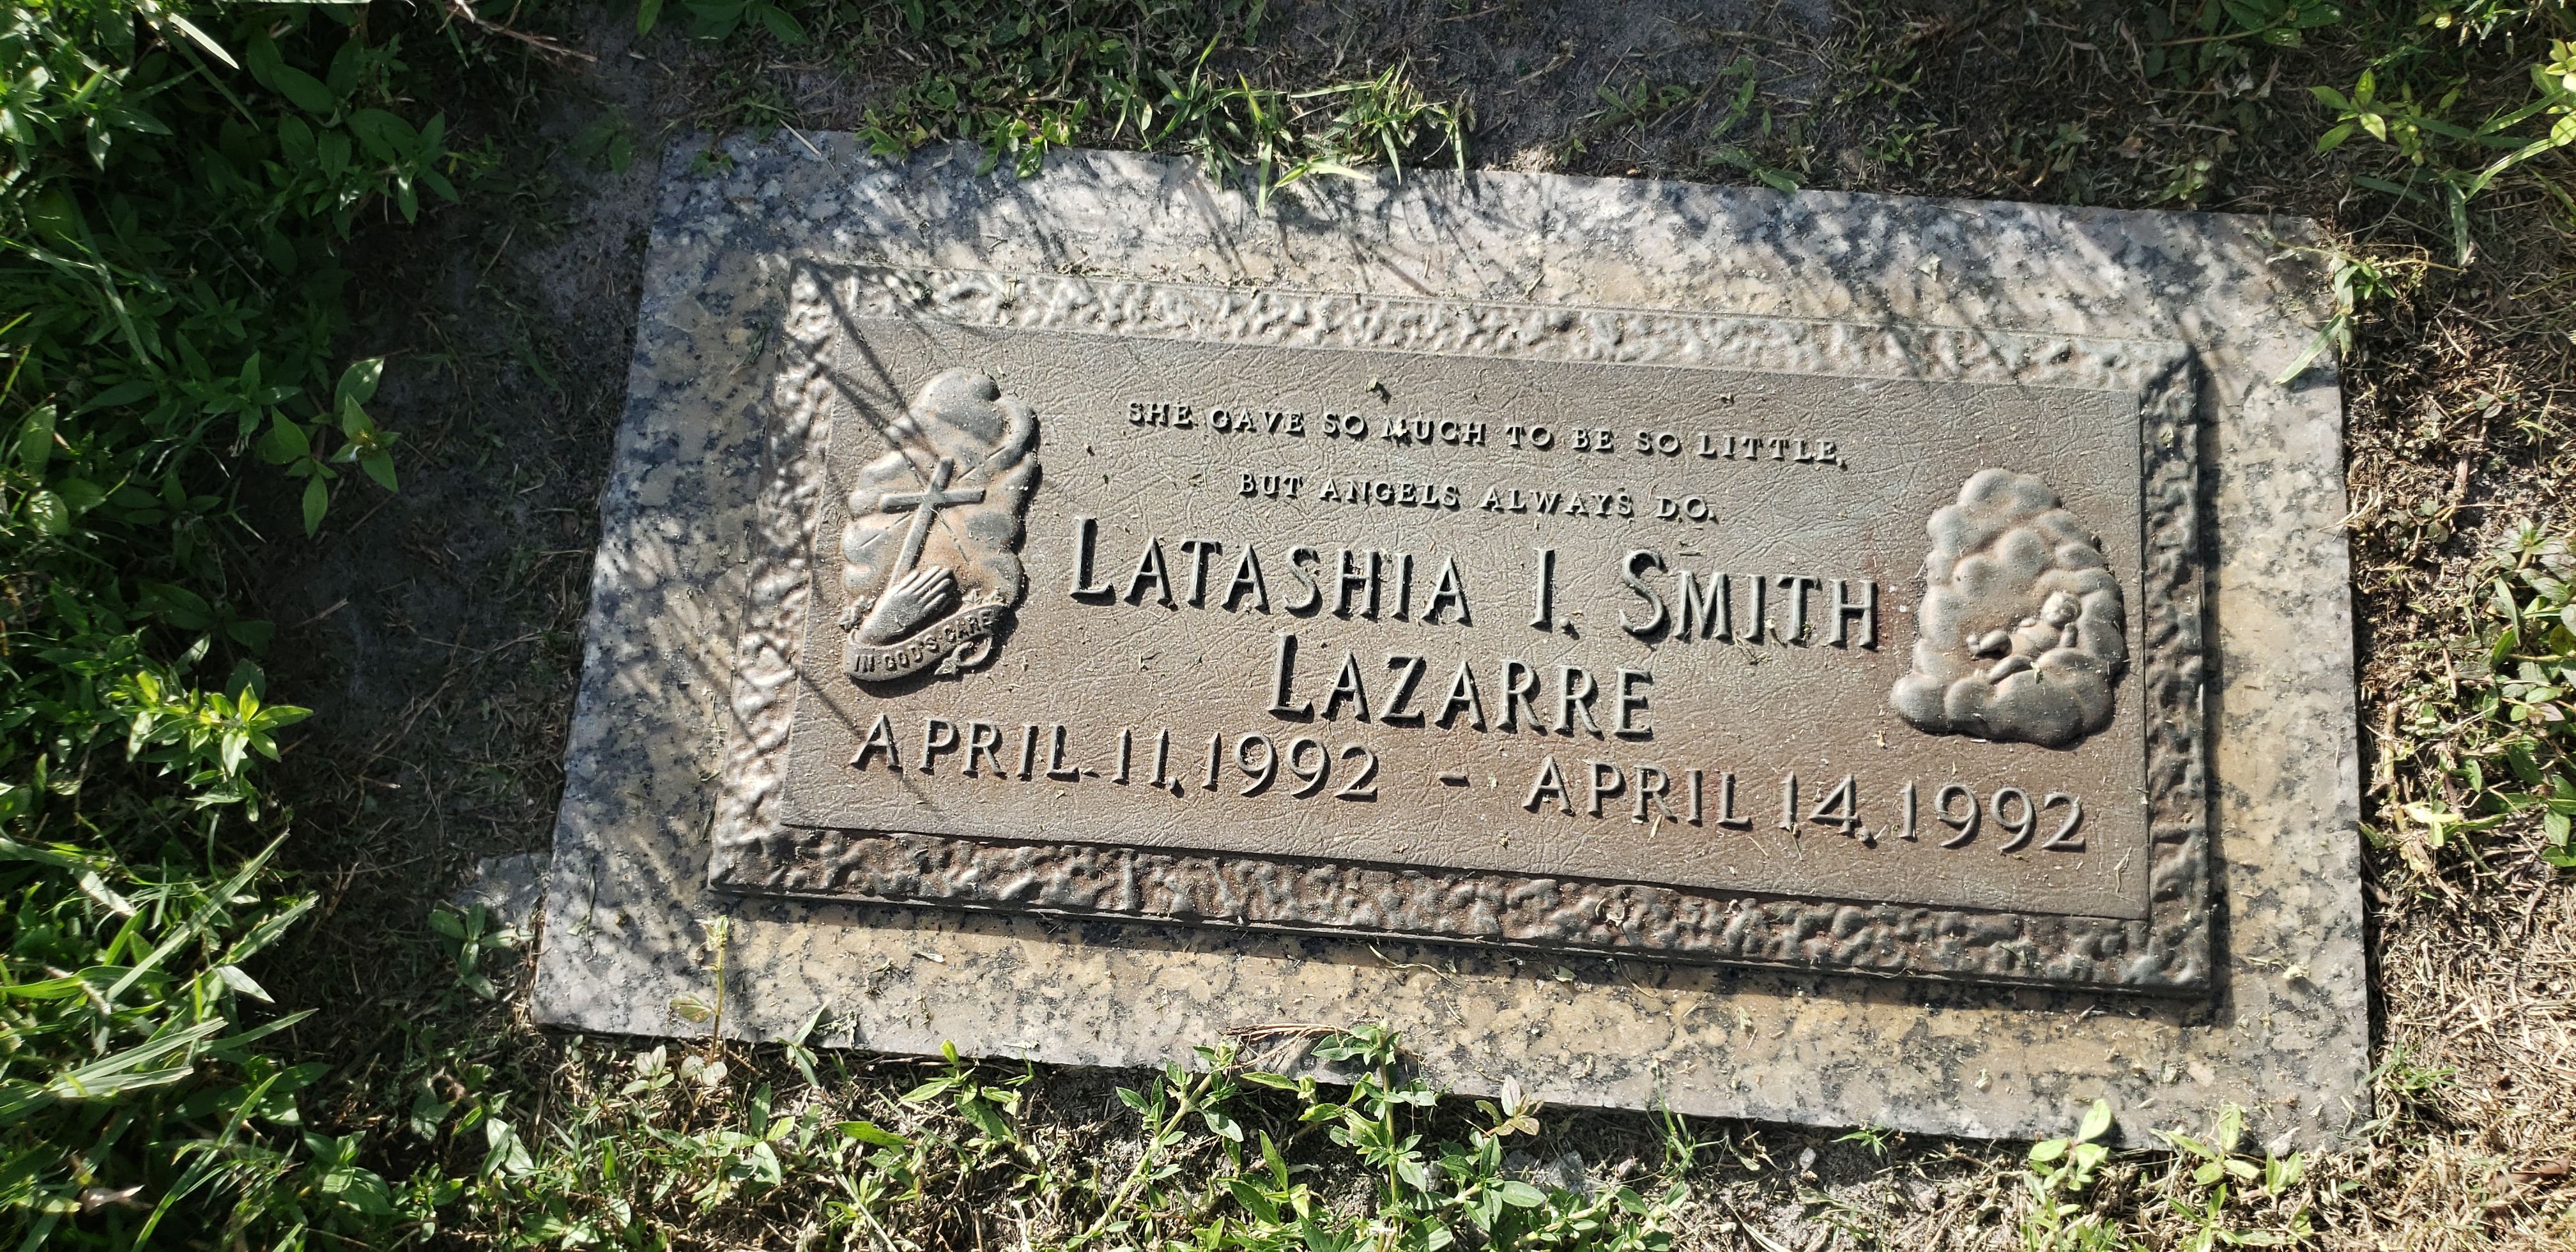 Latashia I Smith Lazarre